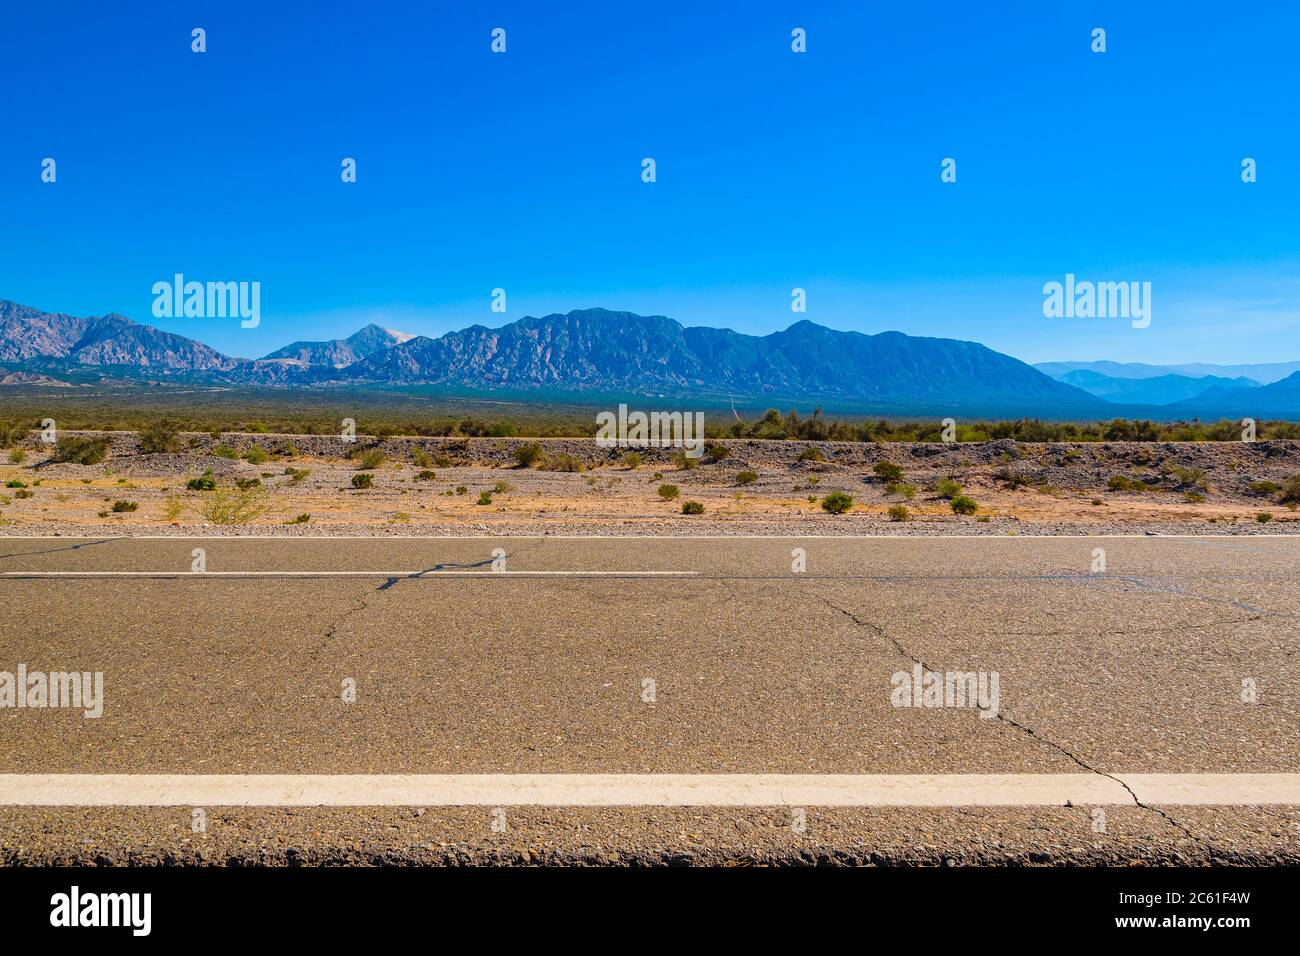 Autostrada vuota in un ambiente aride paesaggio, provincia di san juan, argentina Foto Stock